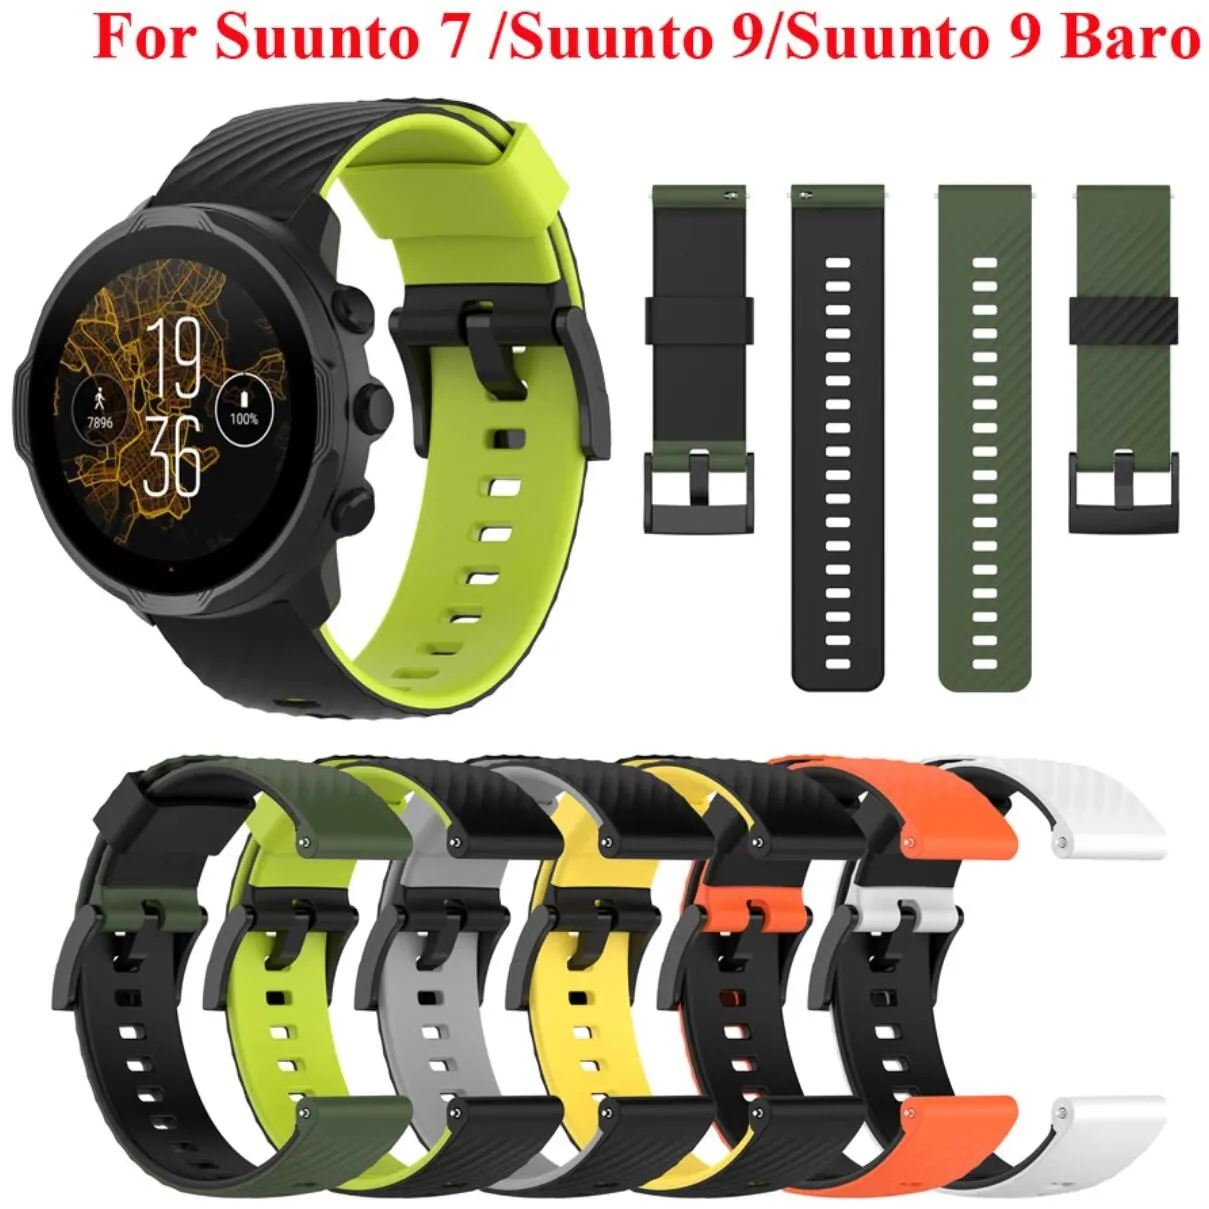 Suunto 7 / Suunto 9 교체 용 손목 밴드 소프트 실리콘 스포츠 시계 스트랩 Suunto 9 Baro / 9 Spartan / 9 GPS 시계 밴드